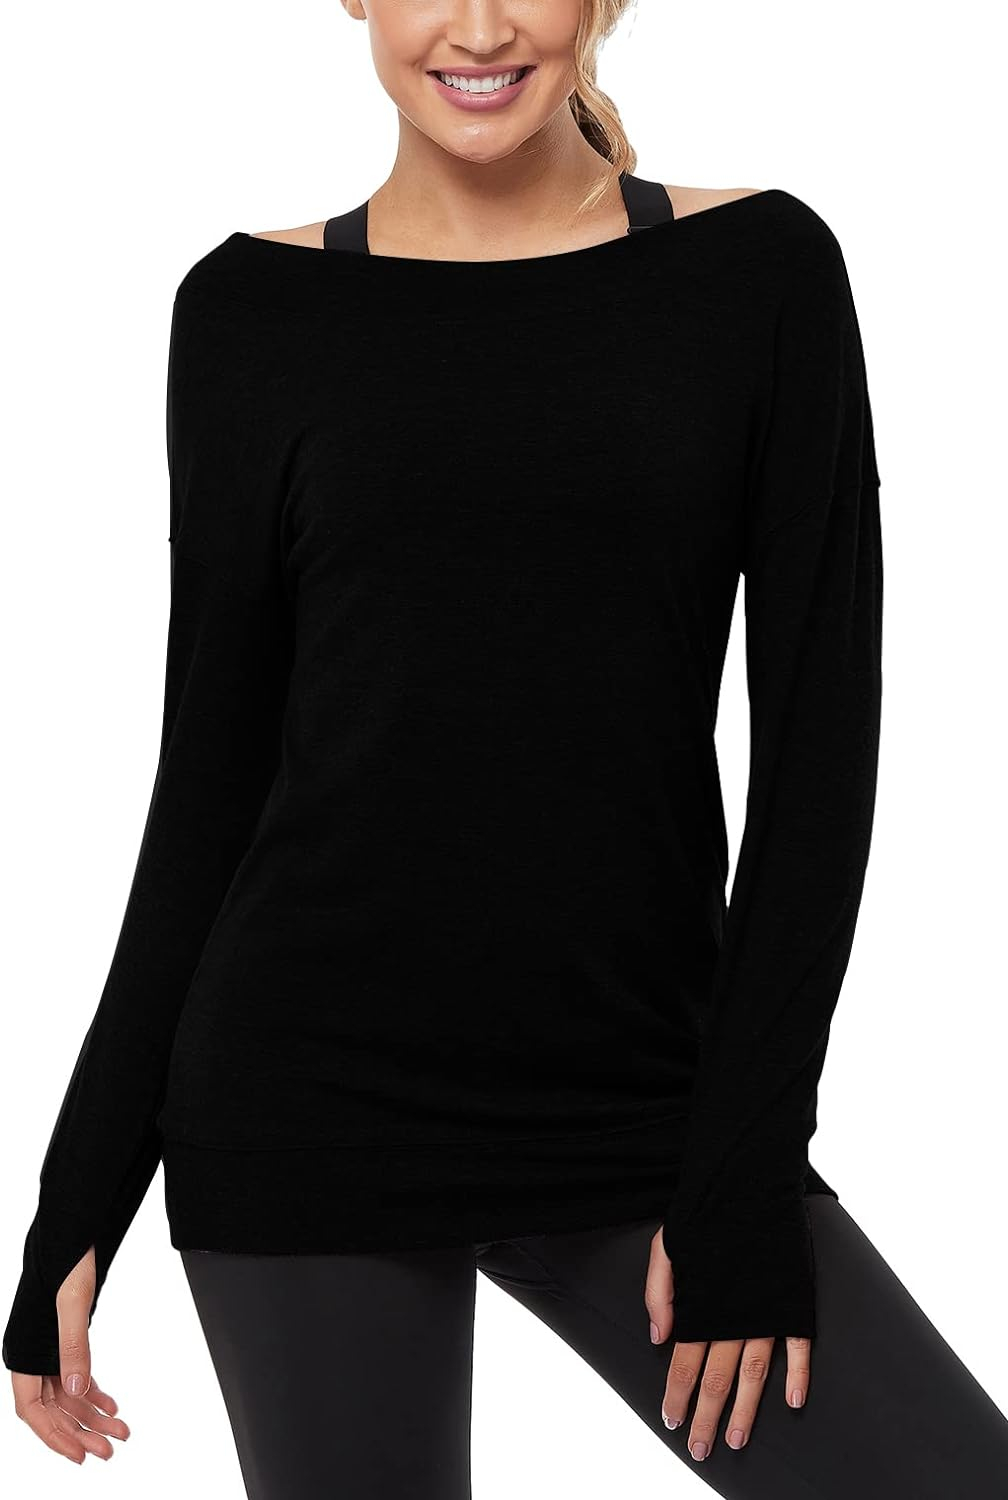 Muzniuer Long Sleeve Workout Shirts-Off Shoulder Long Sleeve Yoga Sports Long T-Shirt Activewear with Thumb Hole